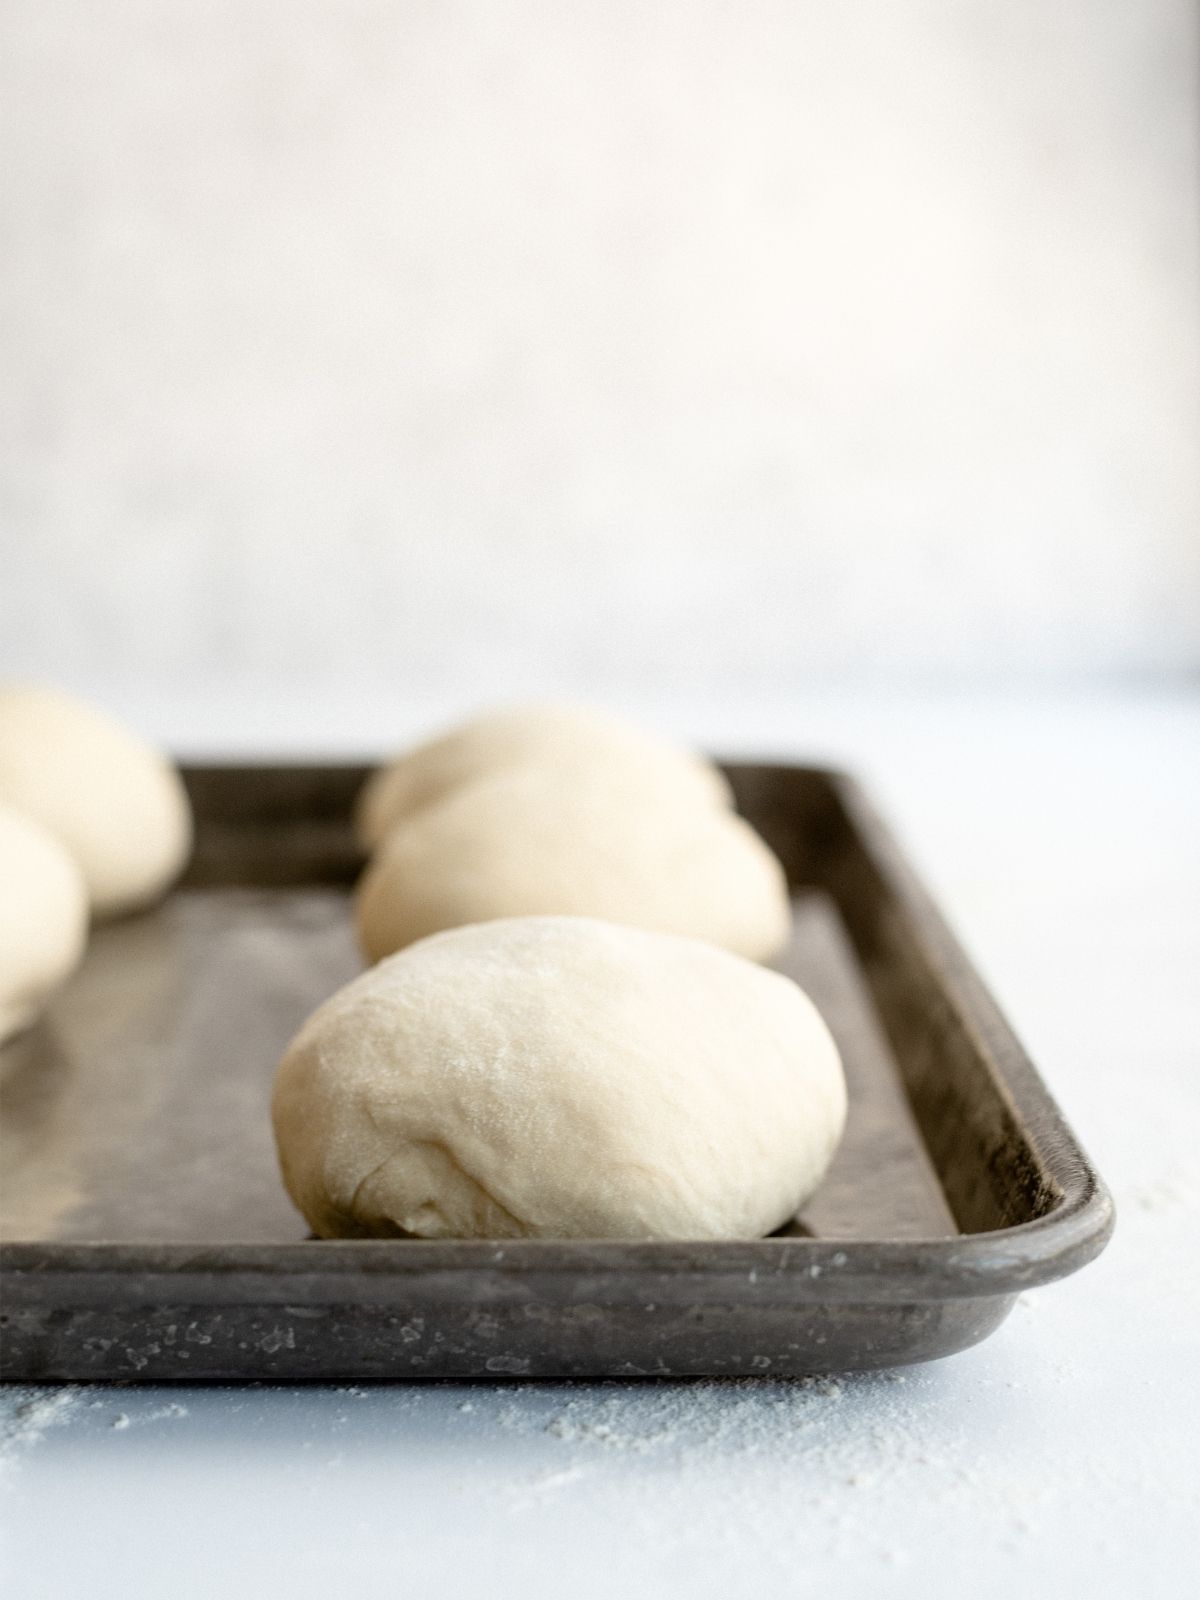 Dough balls for Homemade Bread Bowls on pan